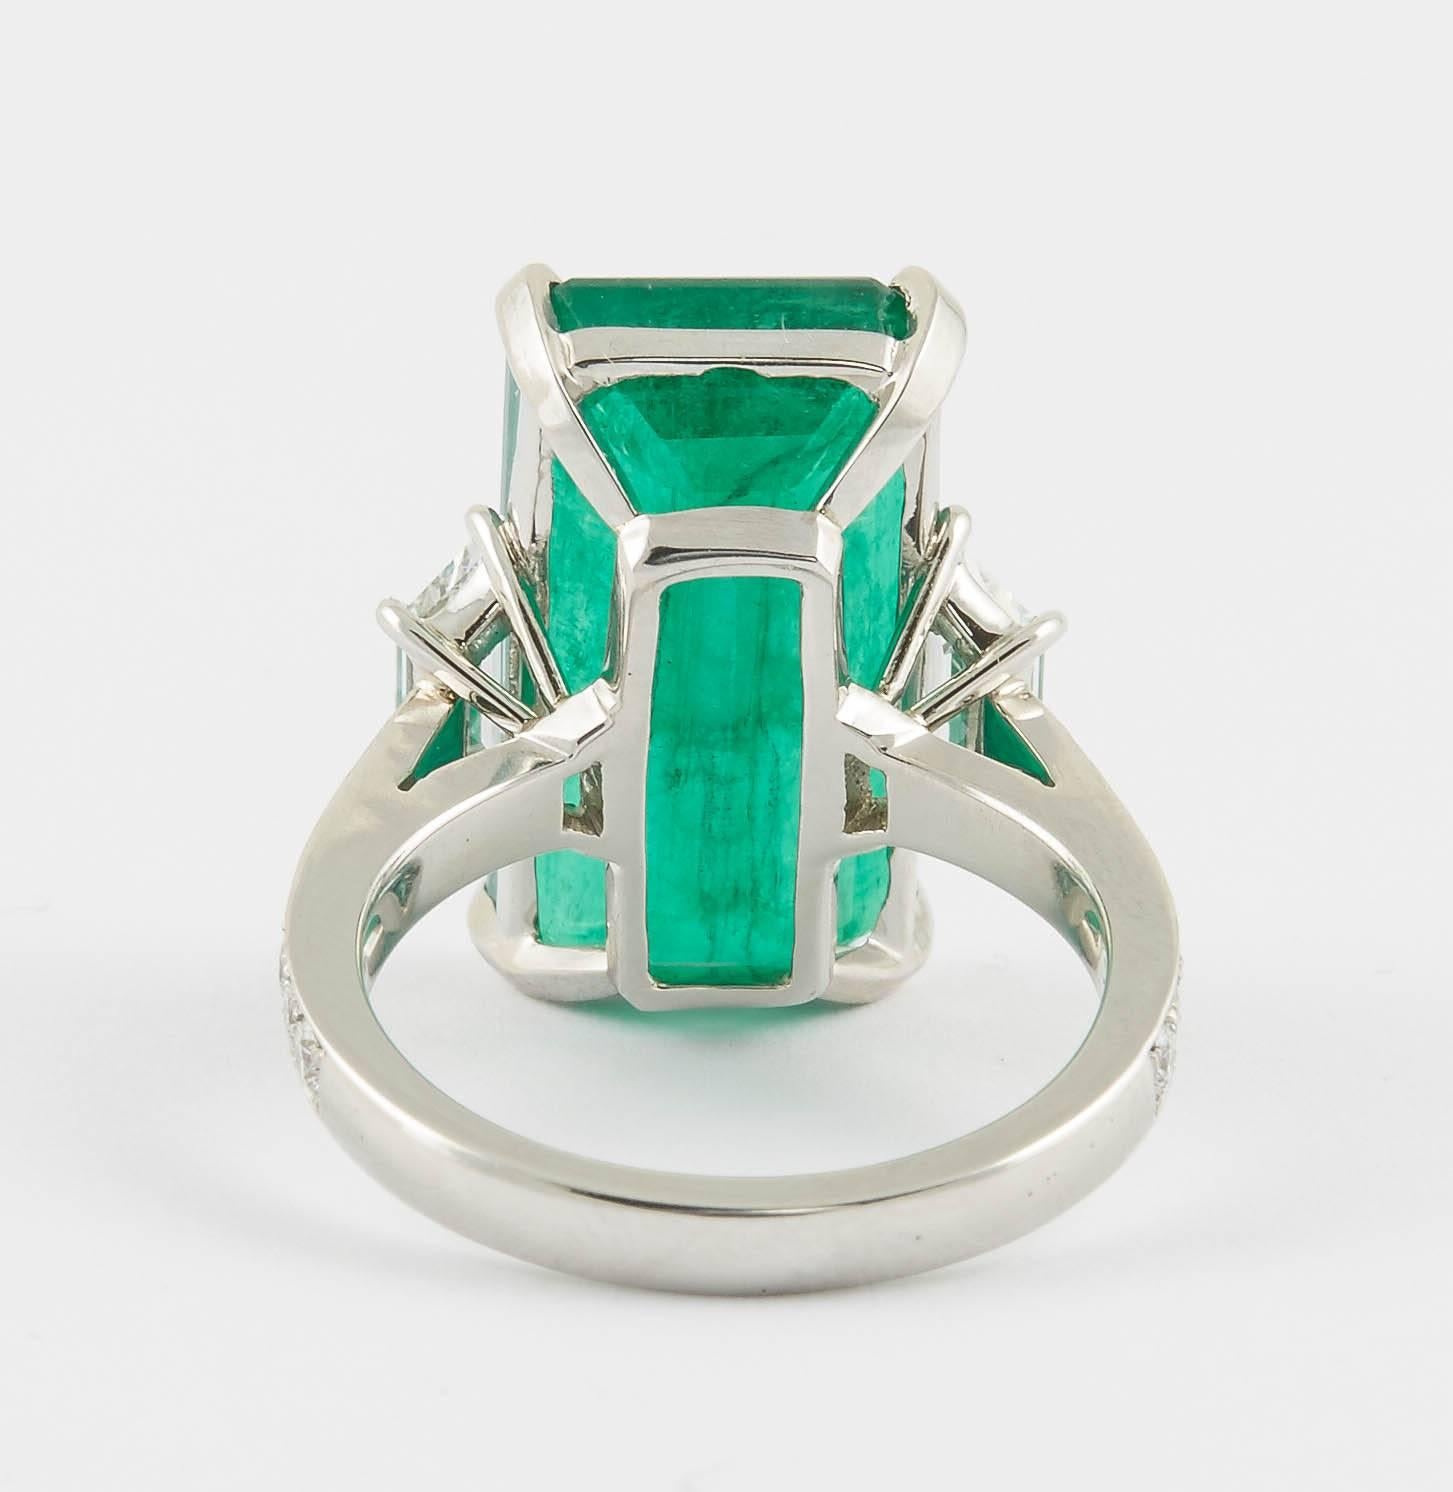 Emerald Cut Unique Elongated 10 Carat Green Emerald Ring For Sale